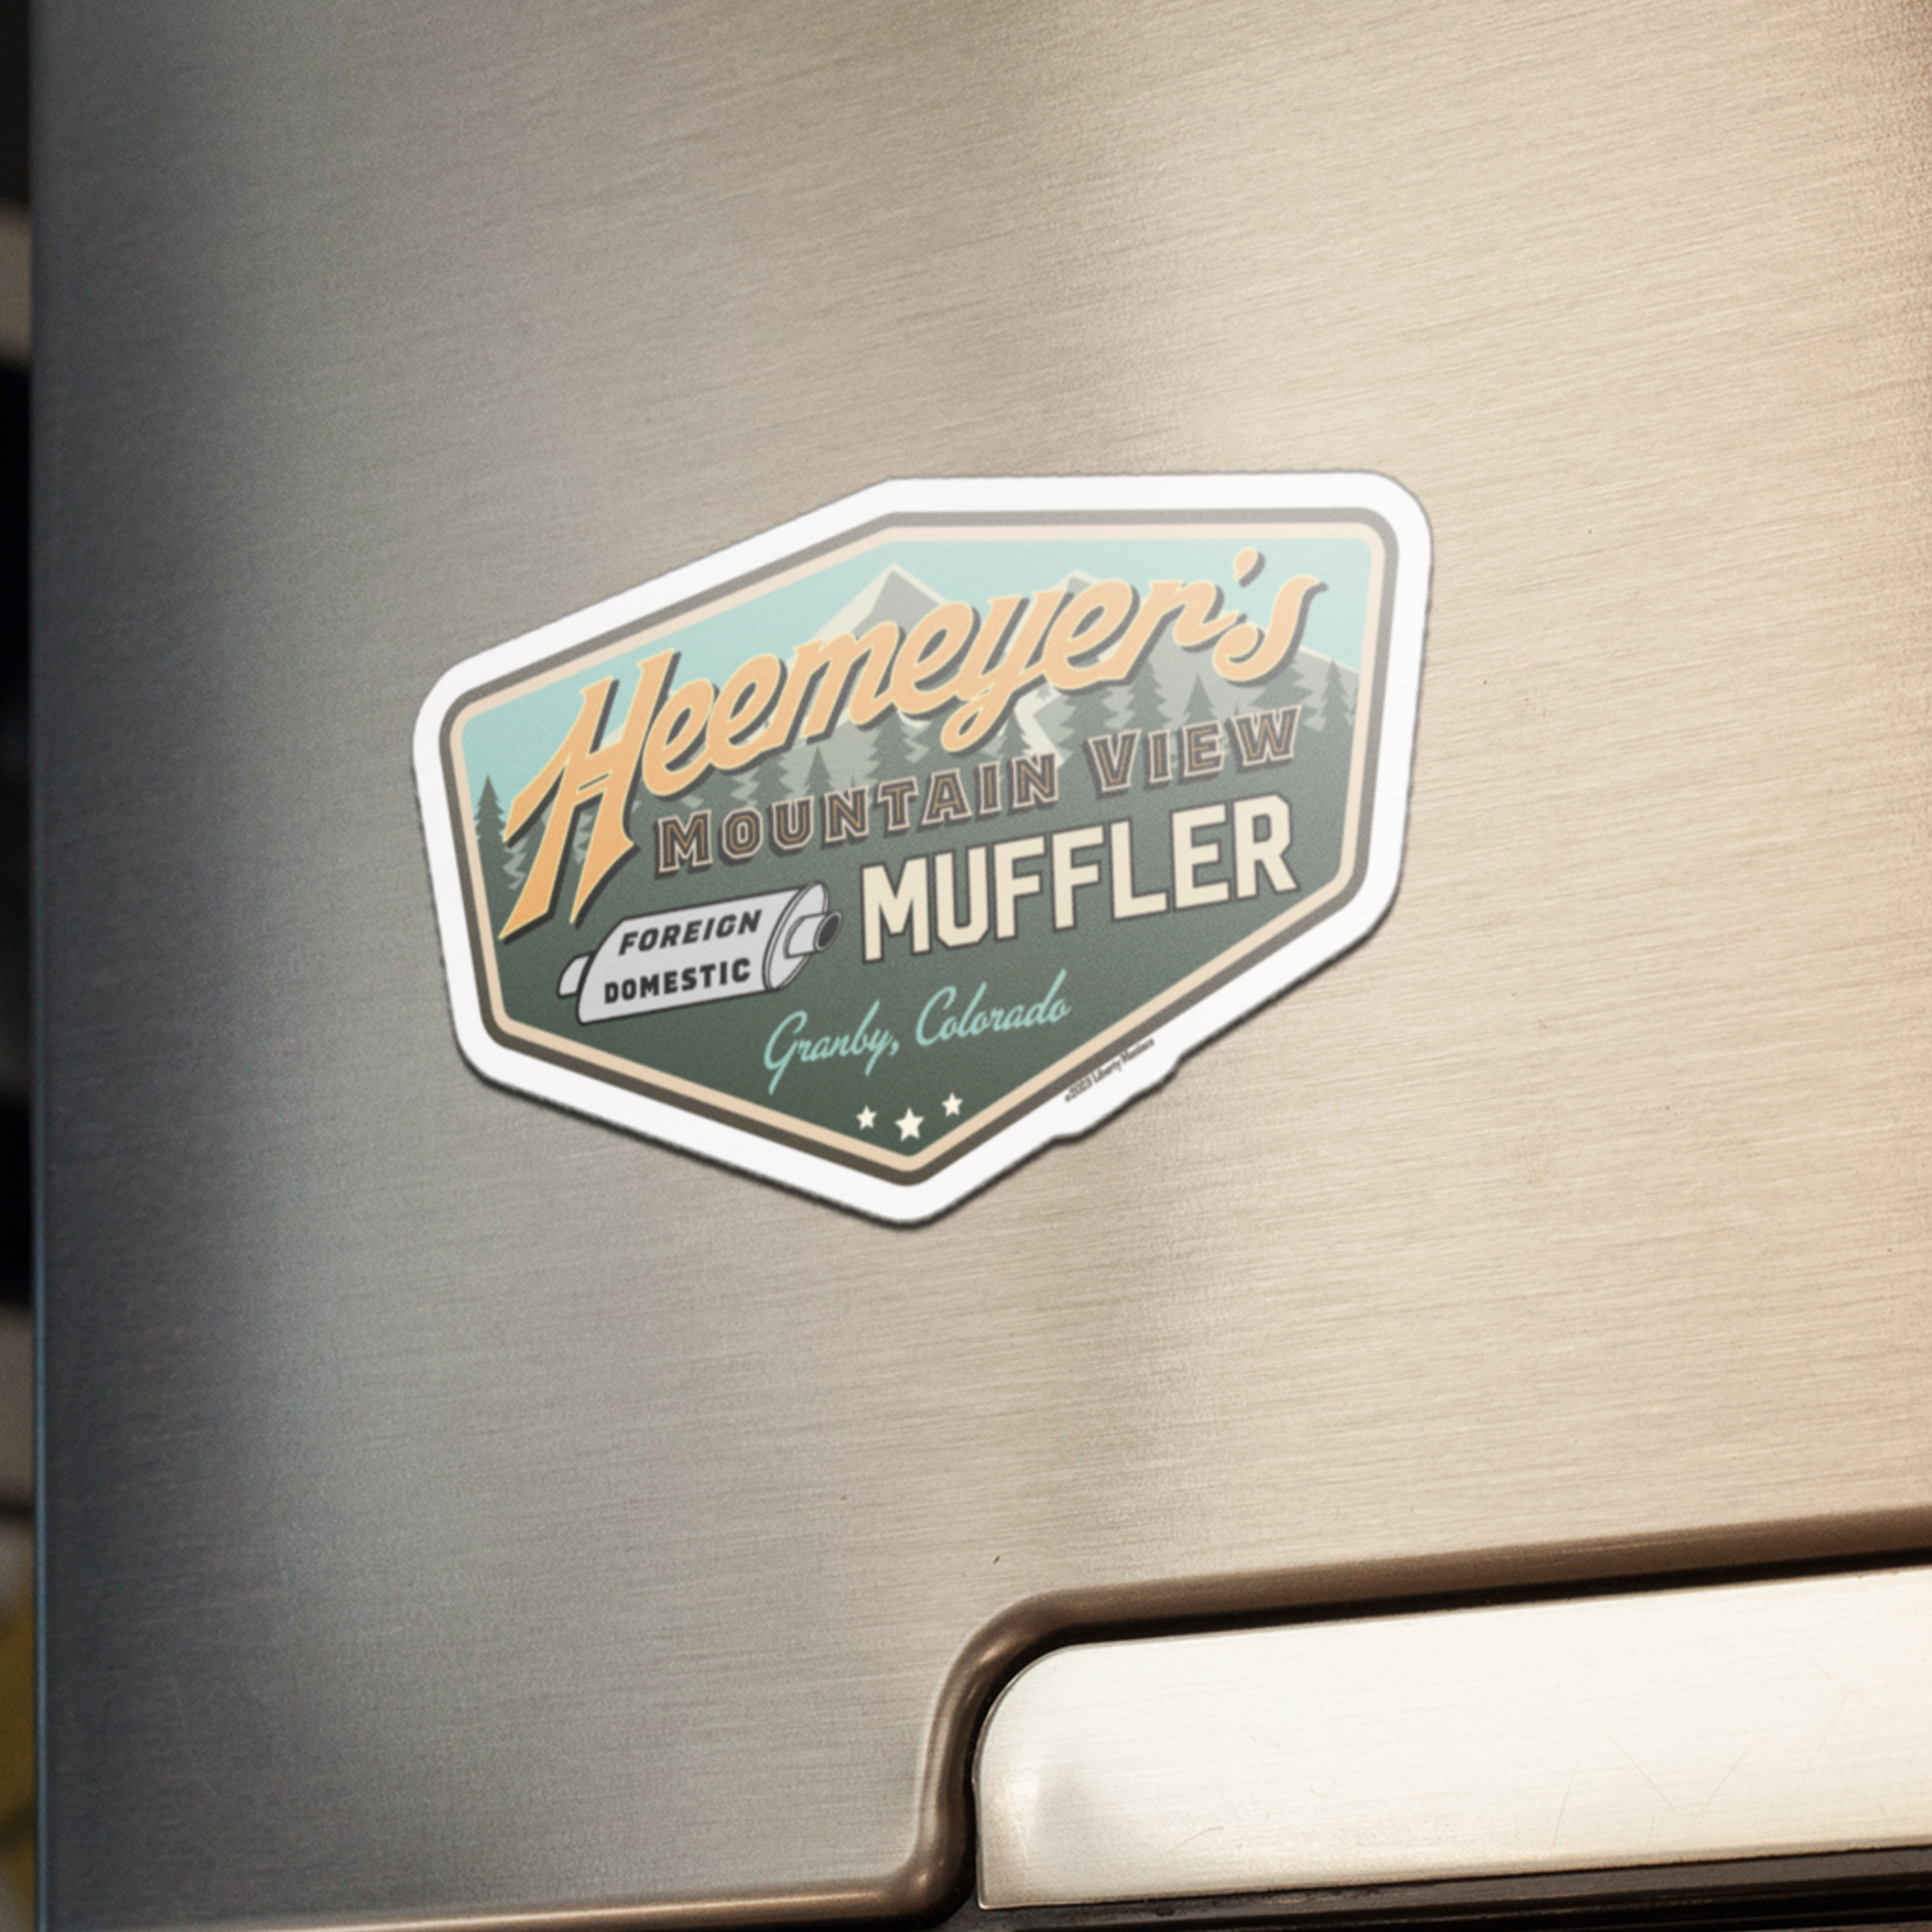 Heemeyer's Mountain View Muffler Magnet by Liberty Maniacs